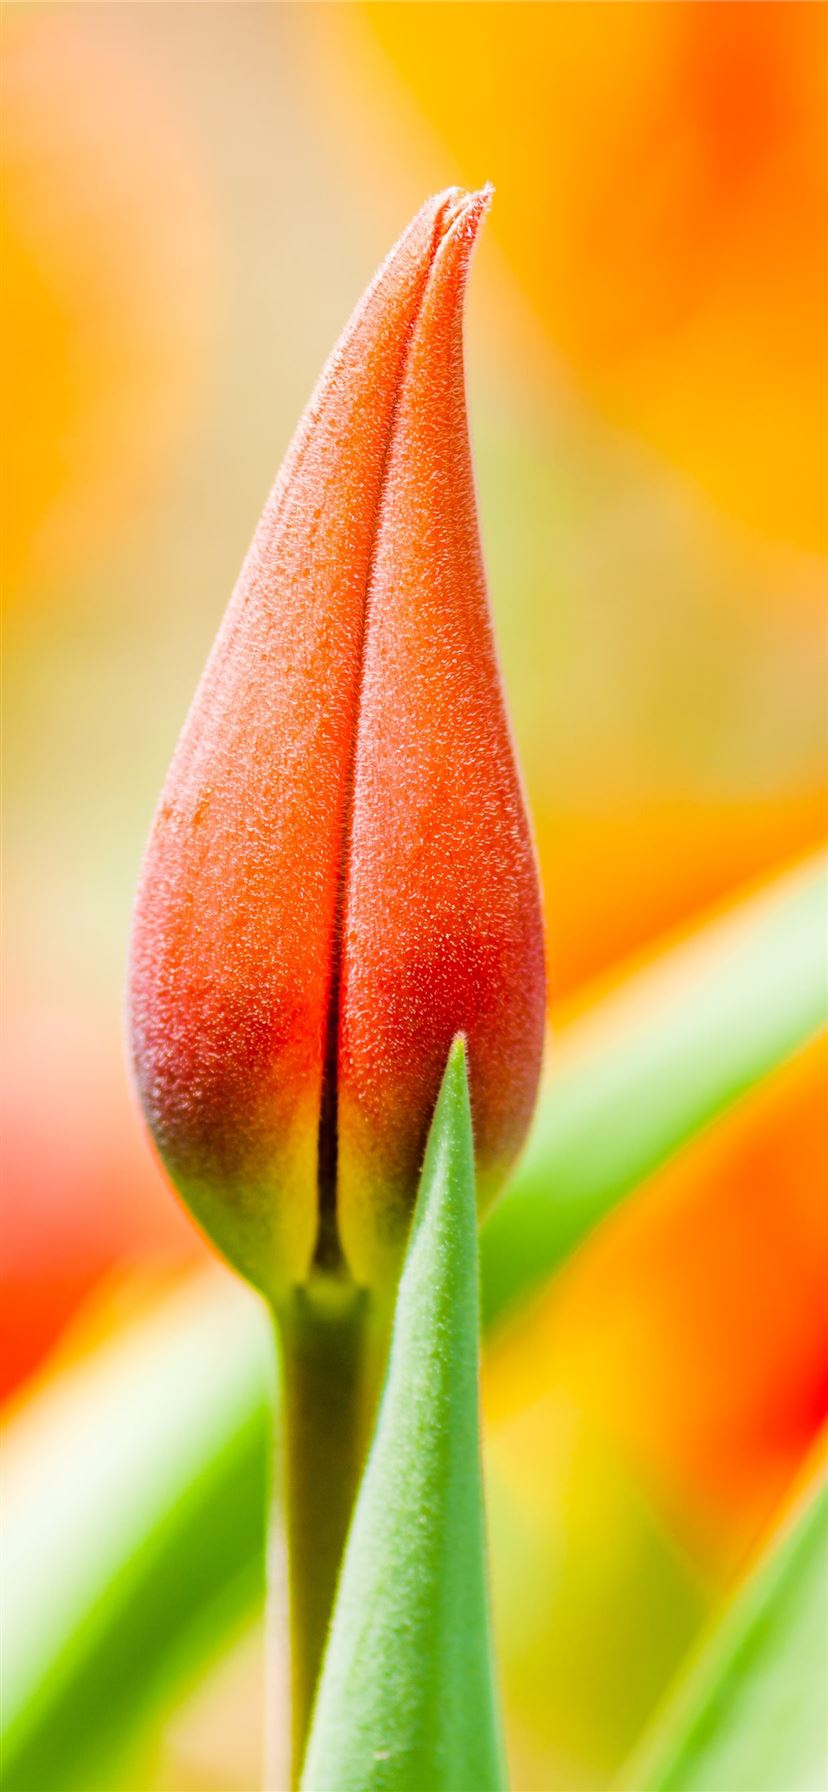 orange tulip bud iPhone 11 Wallpaper Free Download